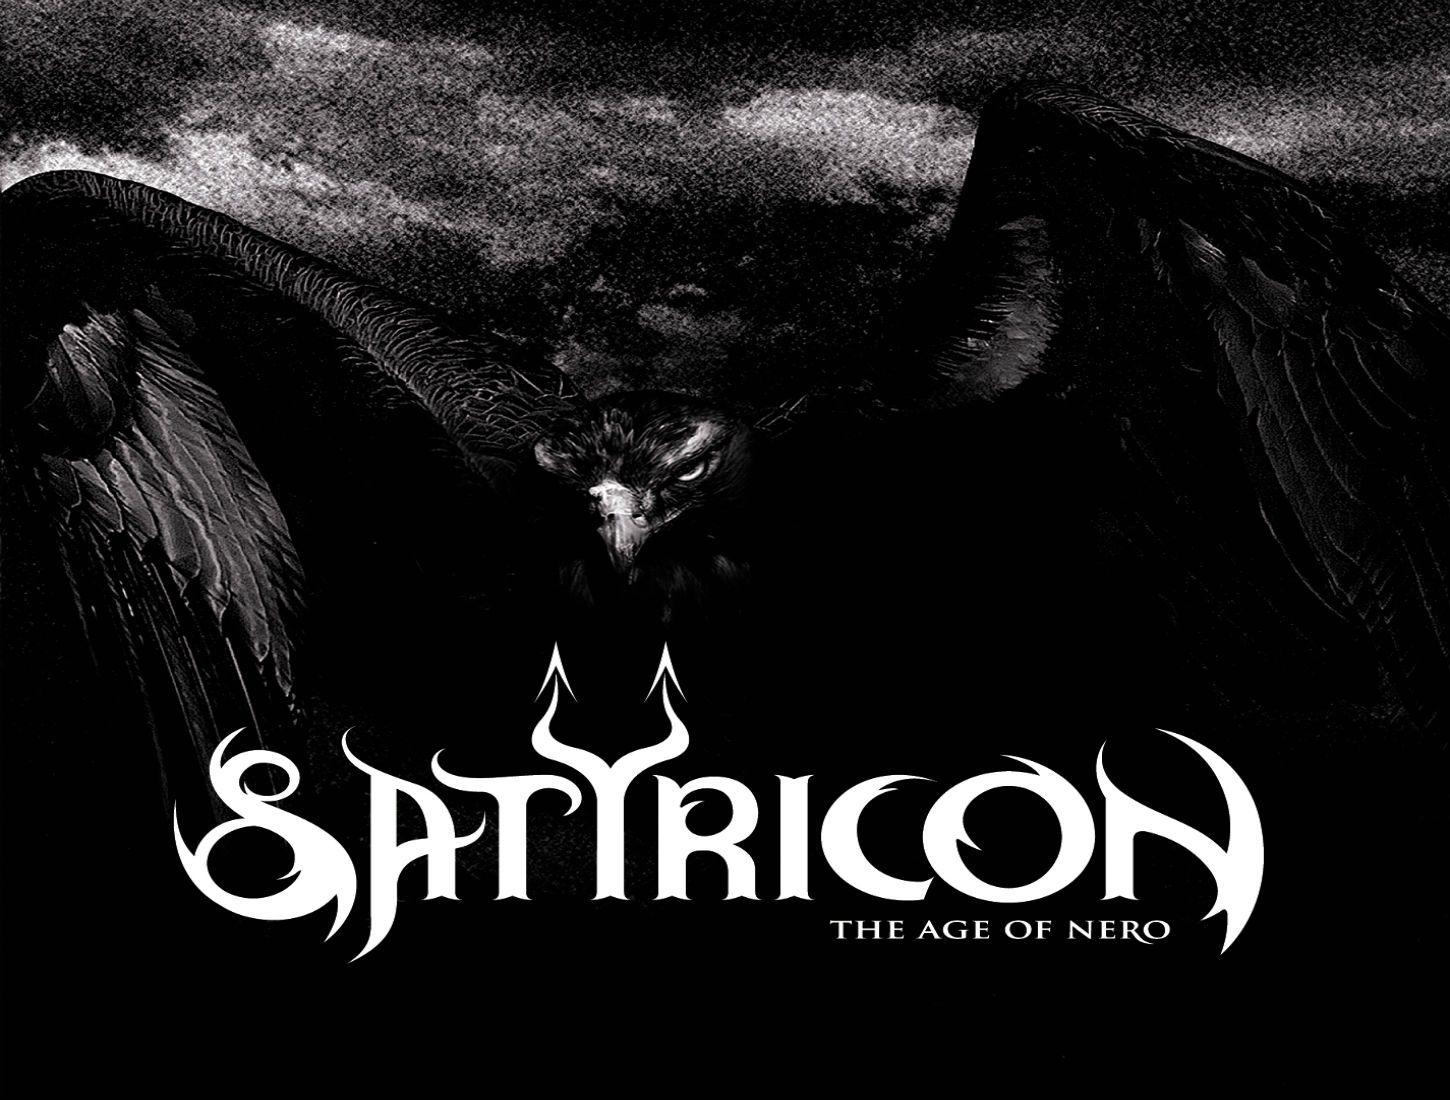 SATYRICON norwegian black metal heavy album art cover dark wallpaper